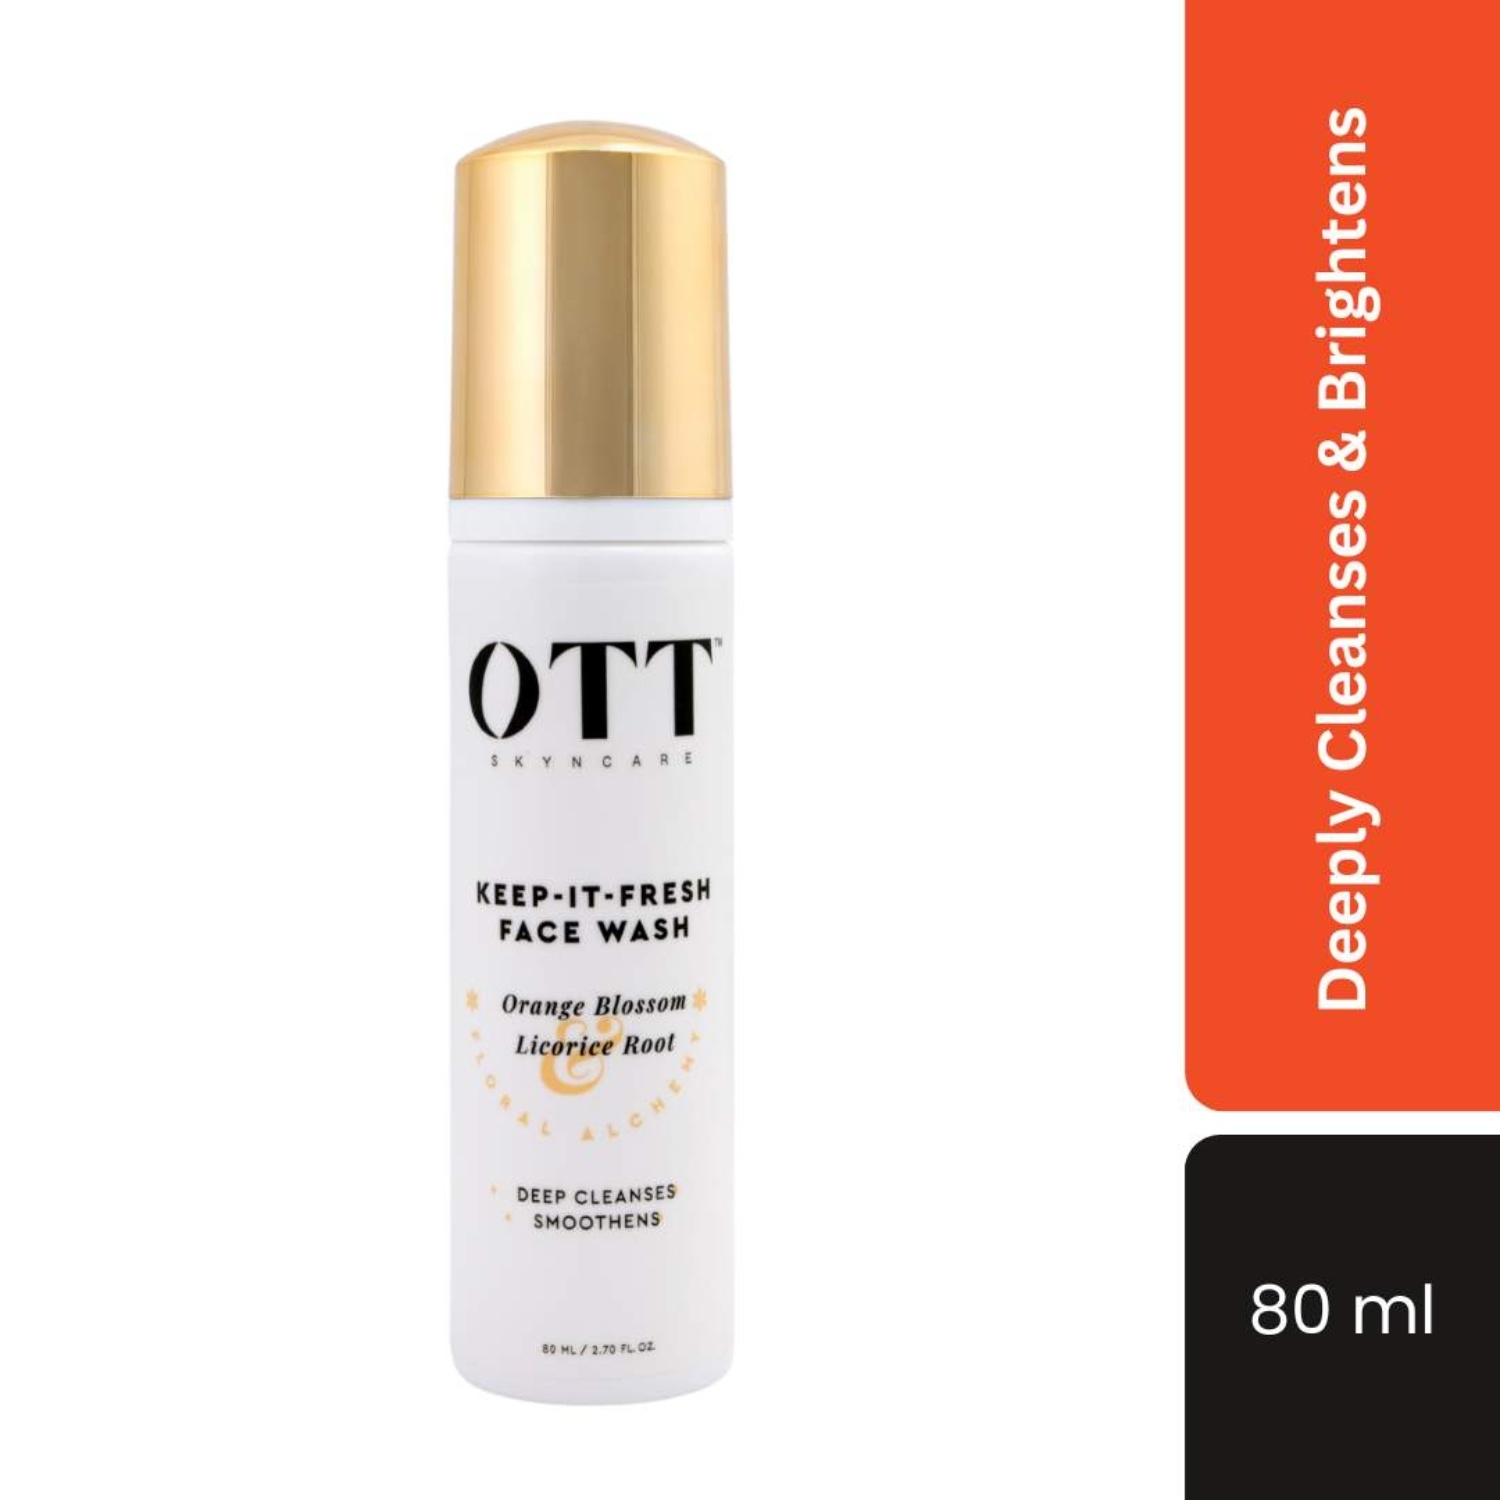 OTT SKYNCARE Keep-It-Fresh Face Wash (80ml)